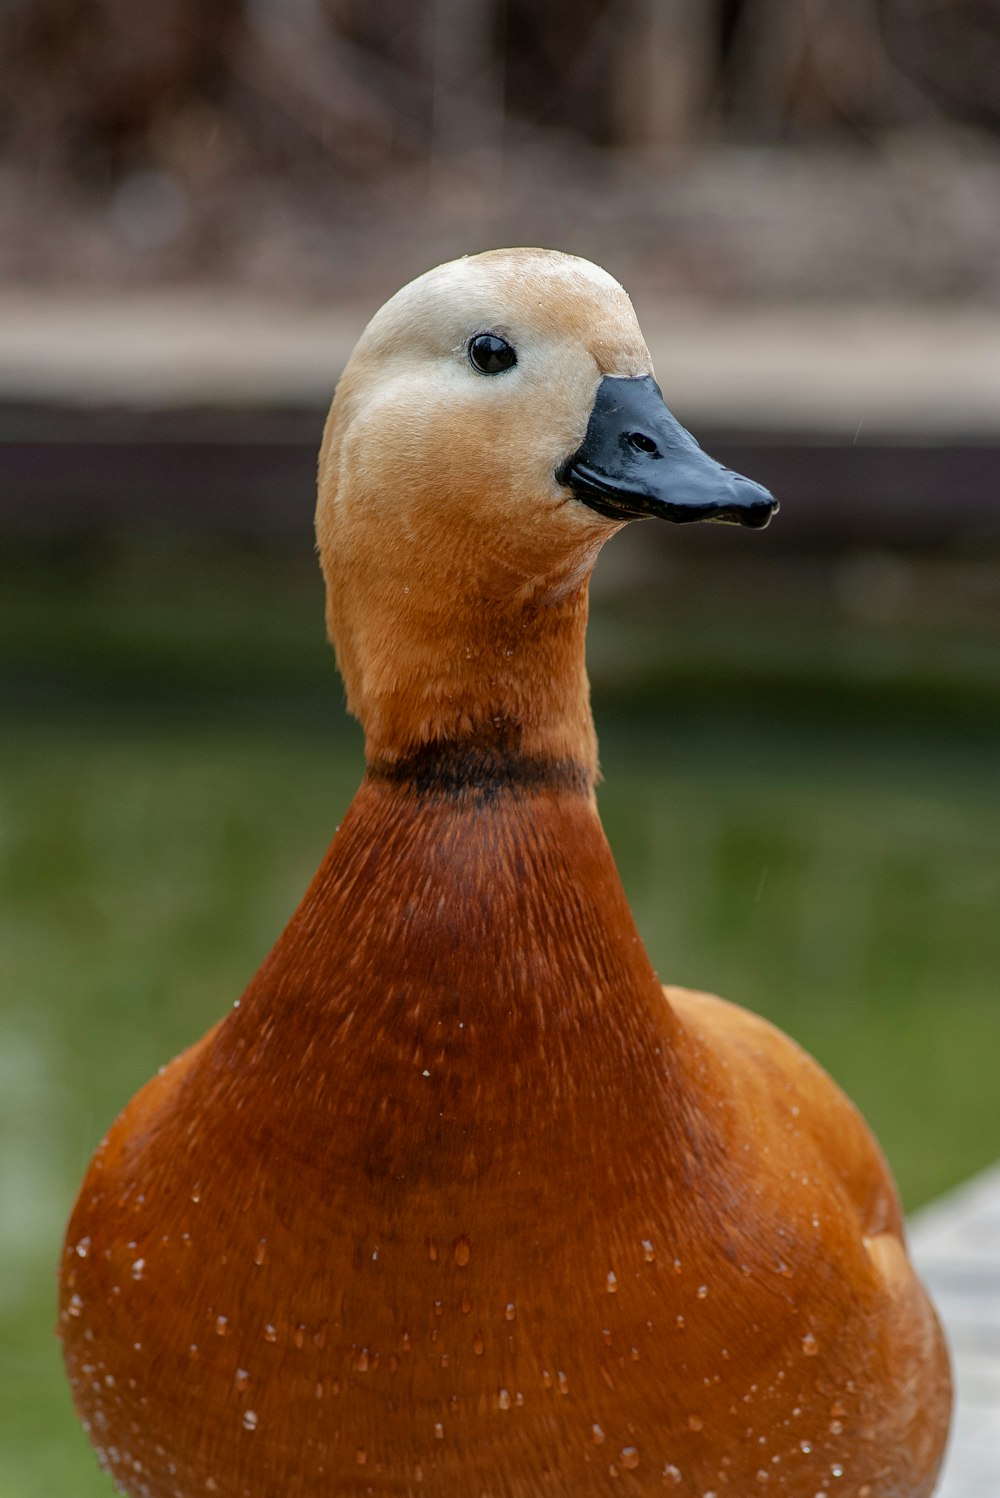 brown duck with black beak photo – Free Aptekarskiy ogorod Image on Unsplash